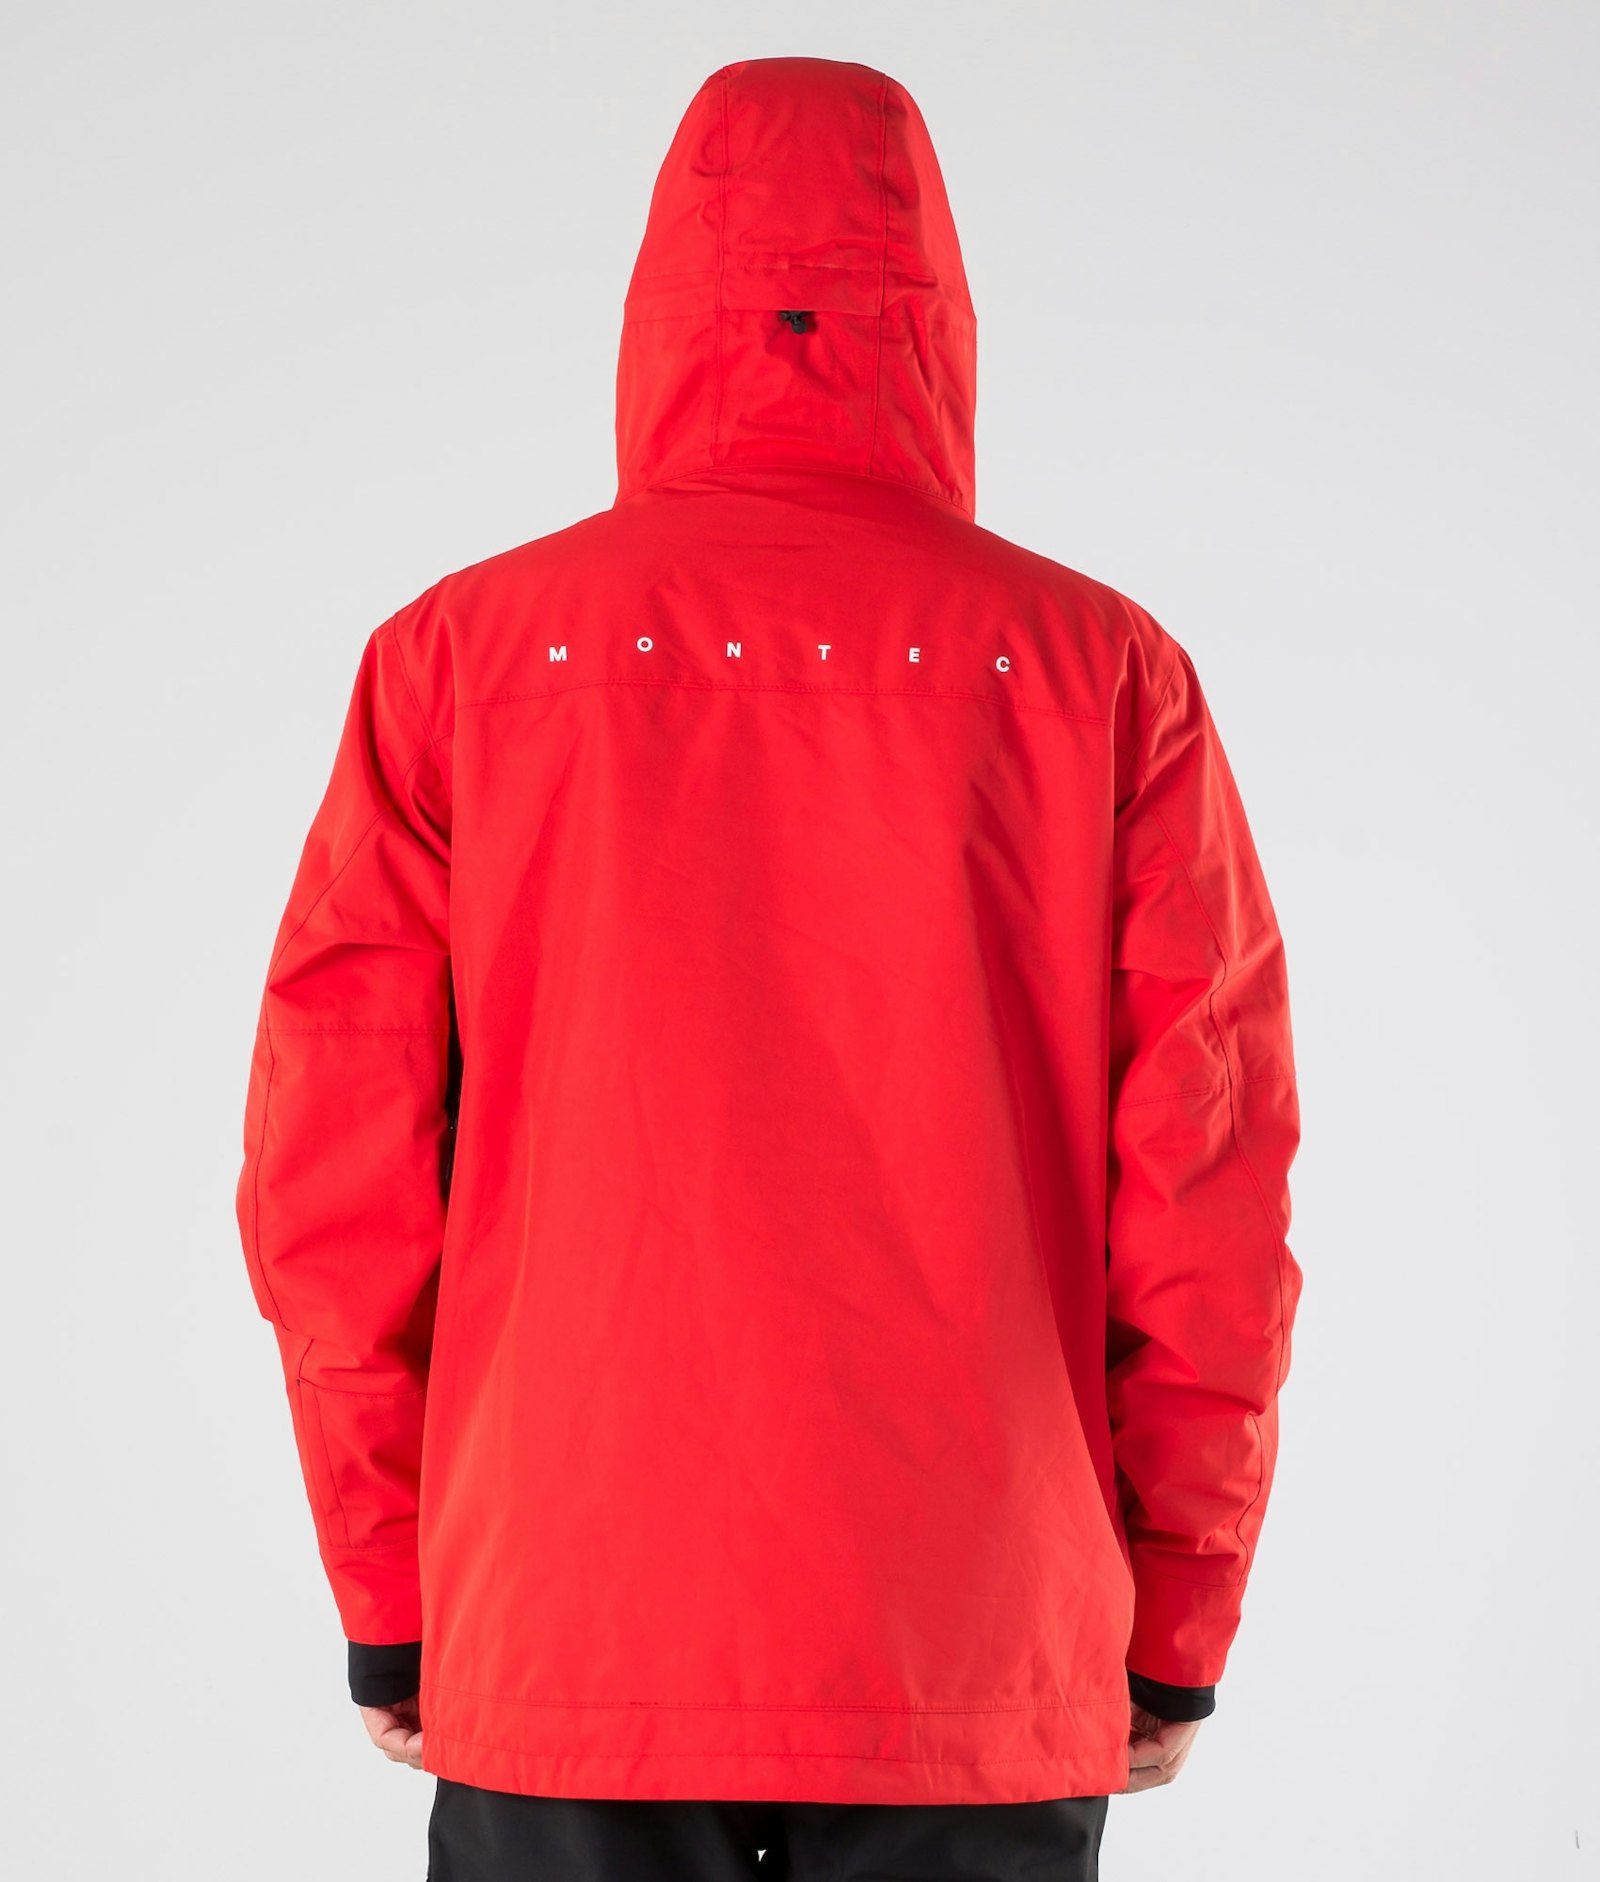 Doom 2019 スキージャケット メンズ Red